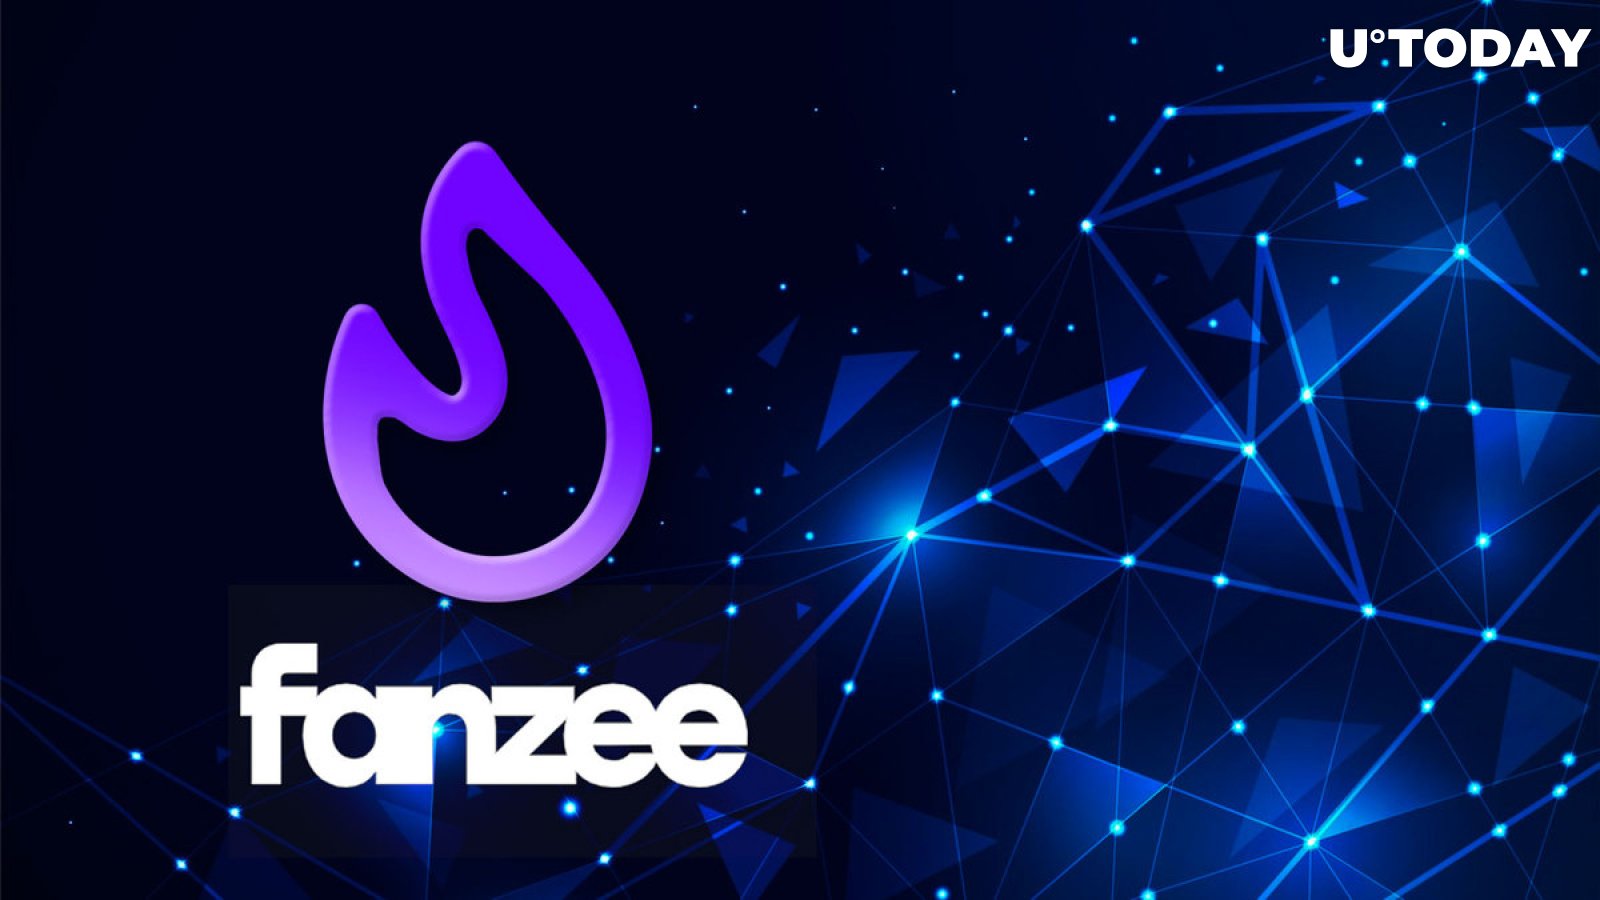 TON-Based Fanzee Secures $2 Million to Launch Novel Fan Engagement Platform